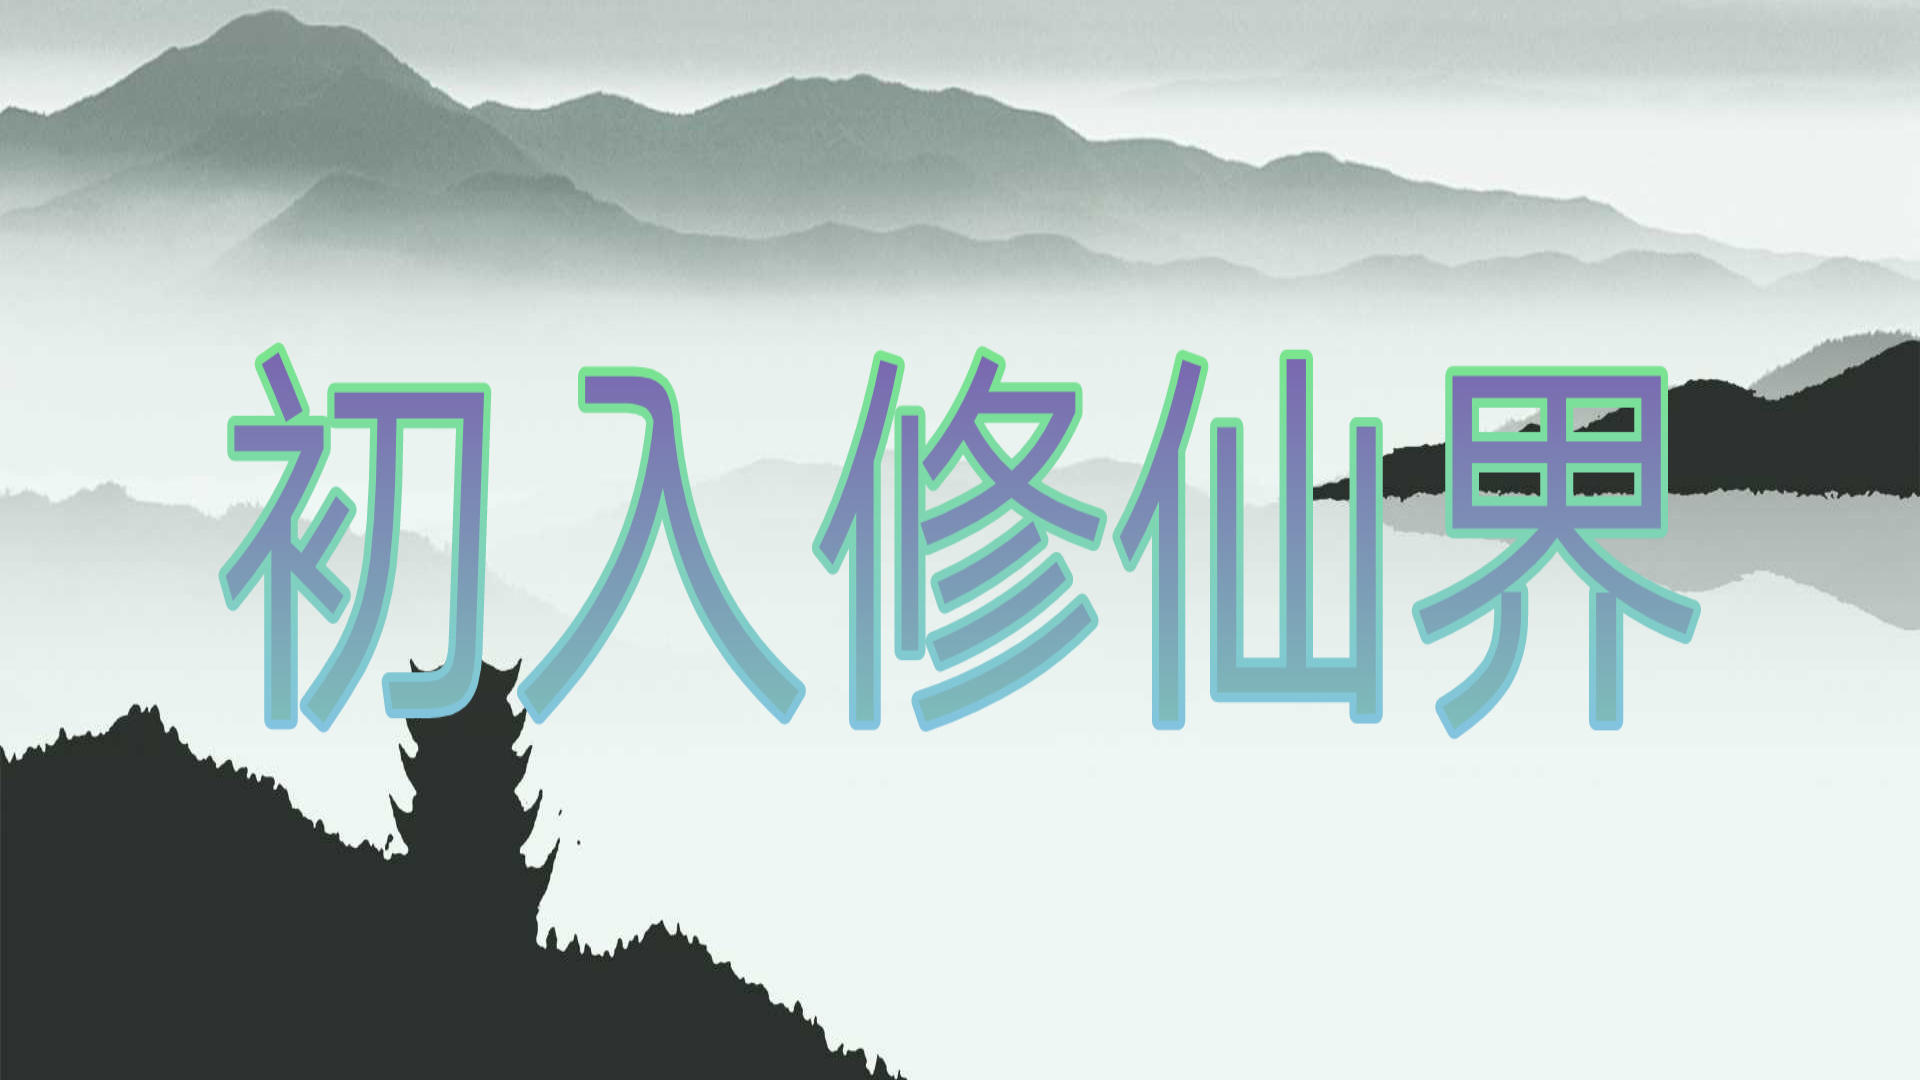 Banner of 初入修仙界 1.9.9